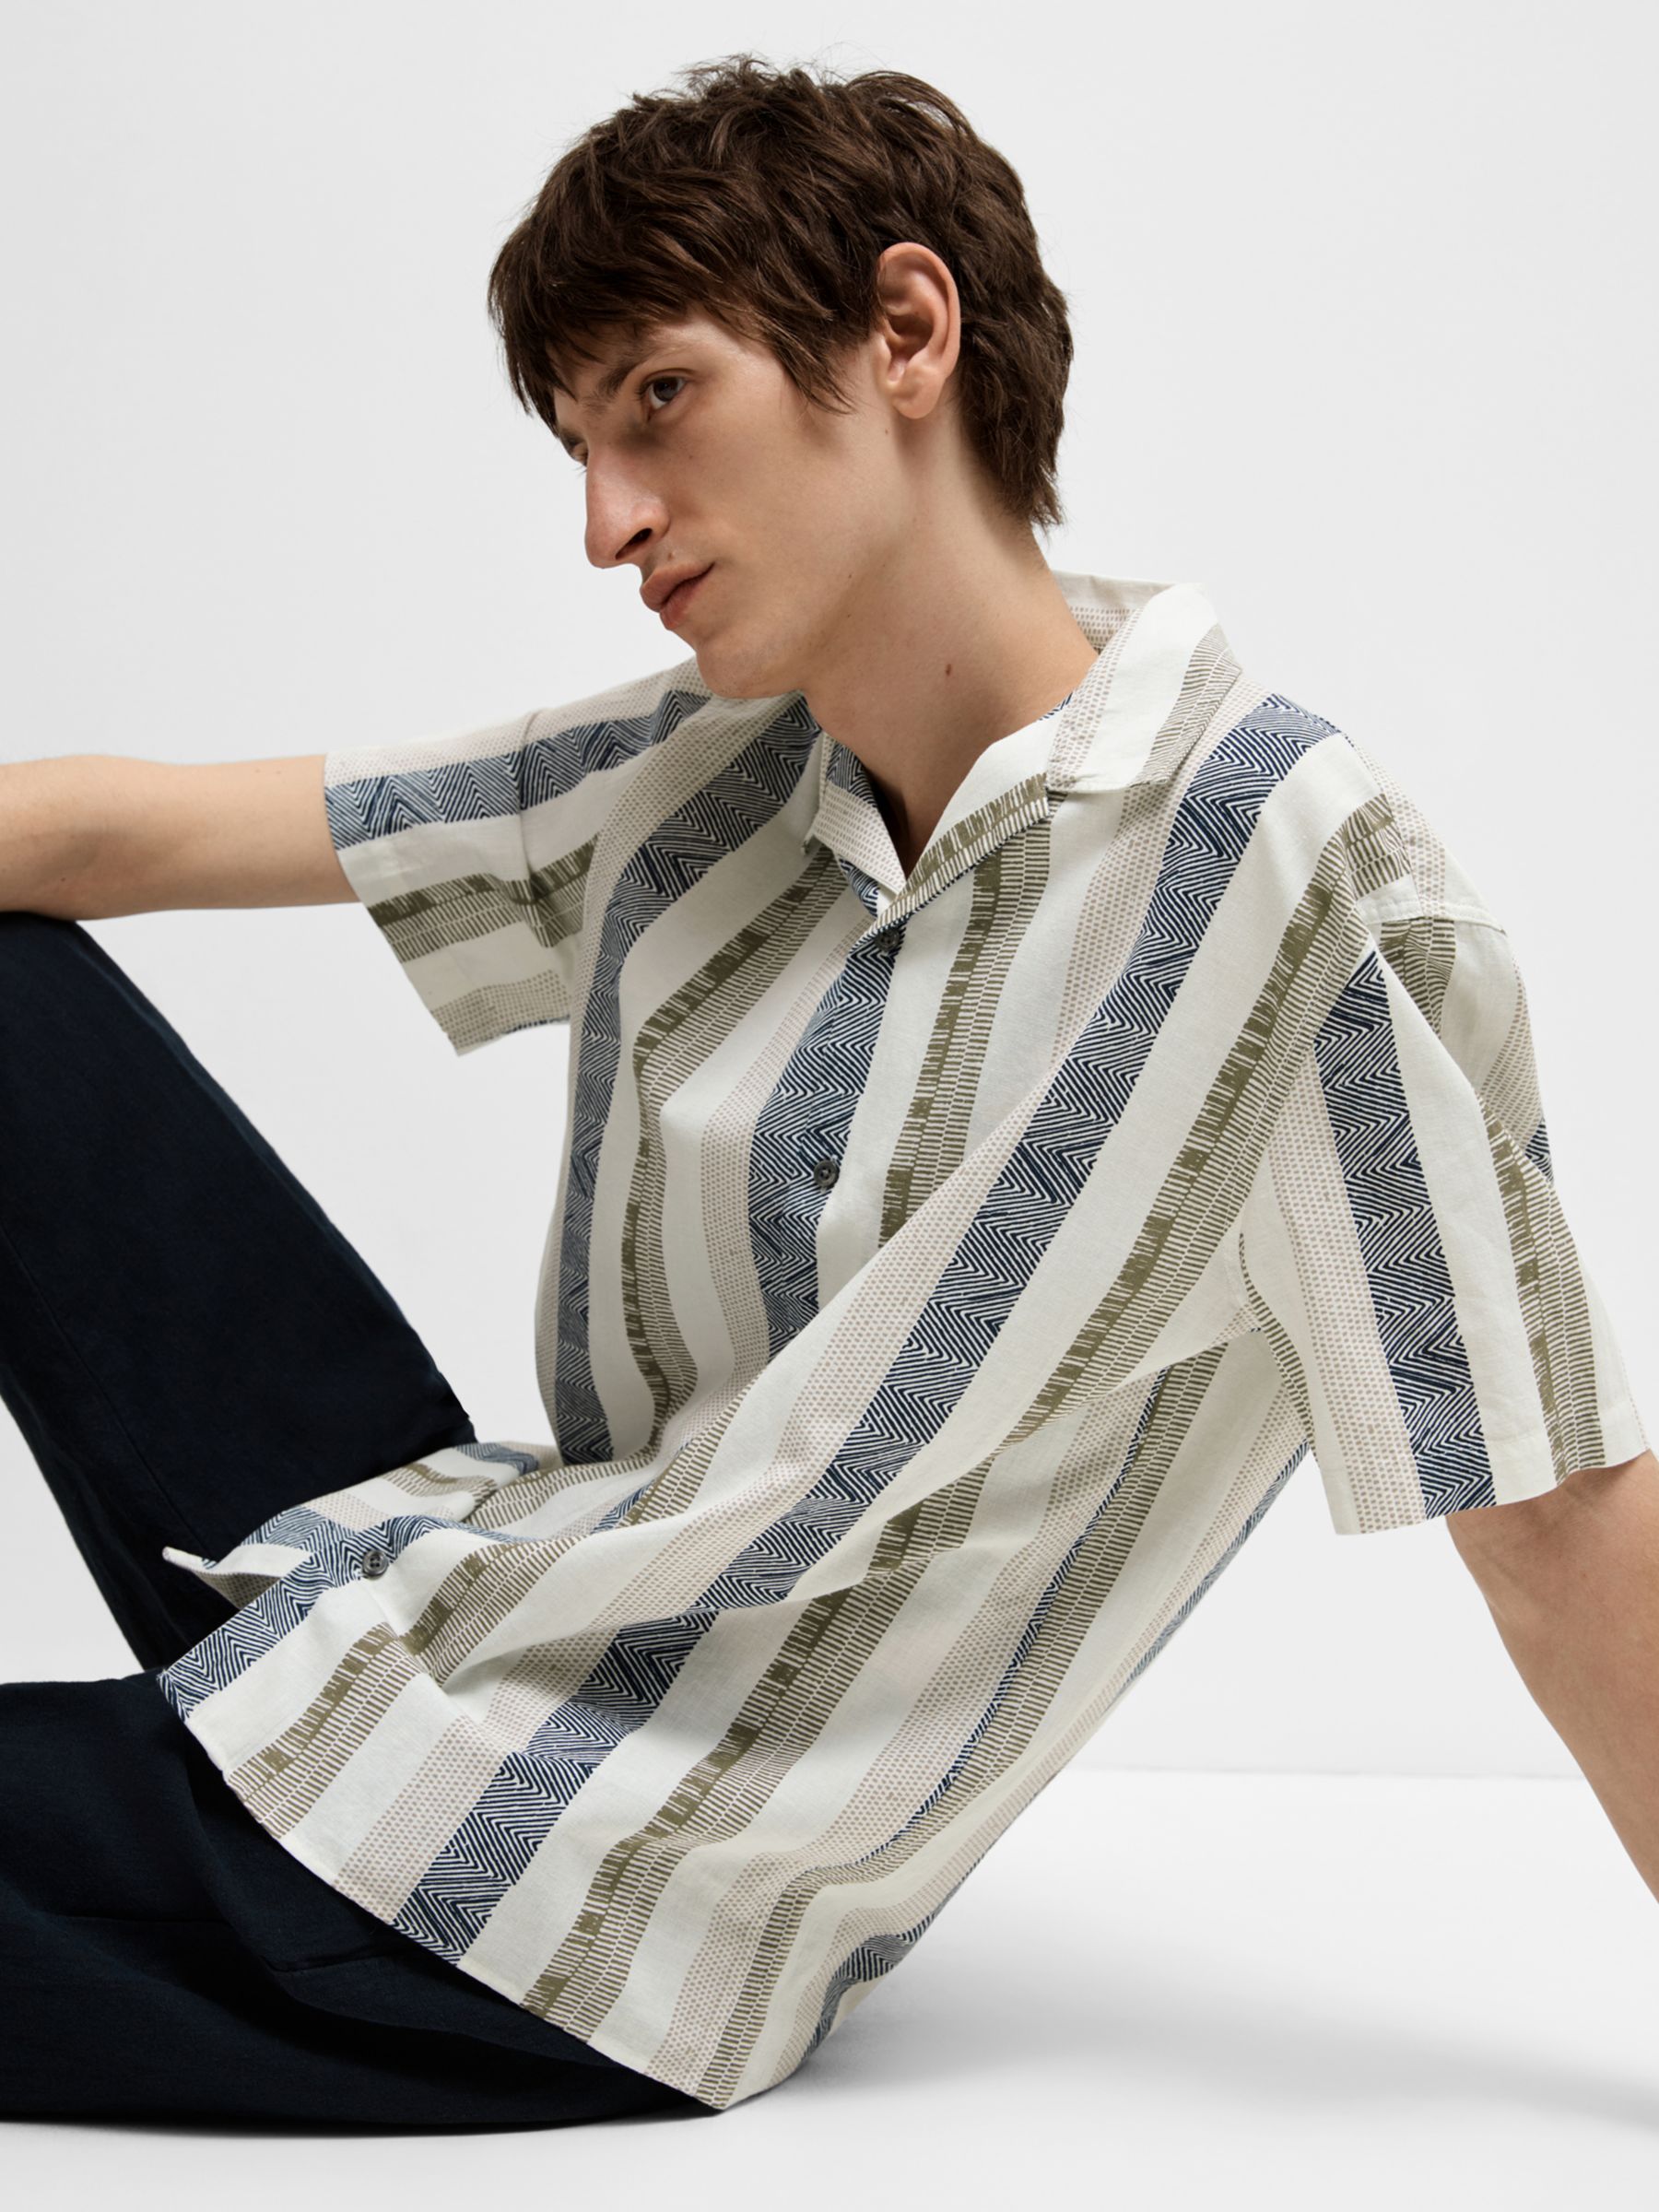 Buy SELECTED HOMME Stripe Linen Cotton Blend Shirt, Egret/Multi Online at johnlewis.com